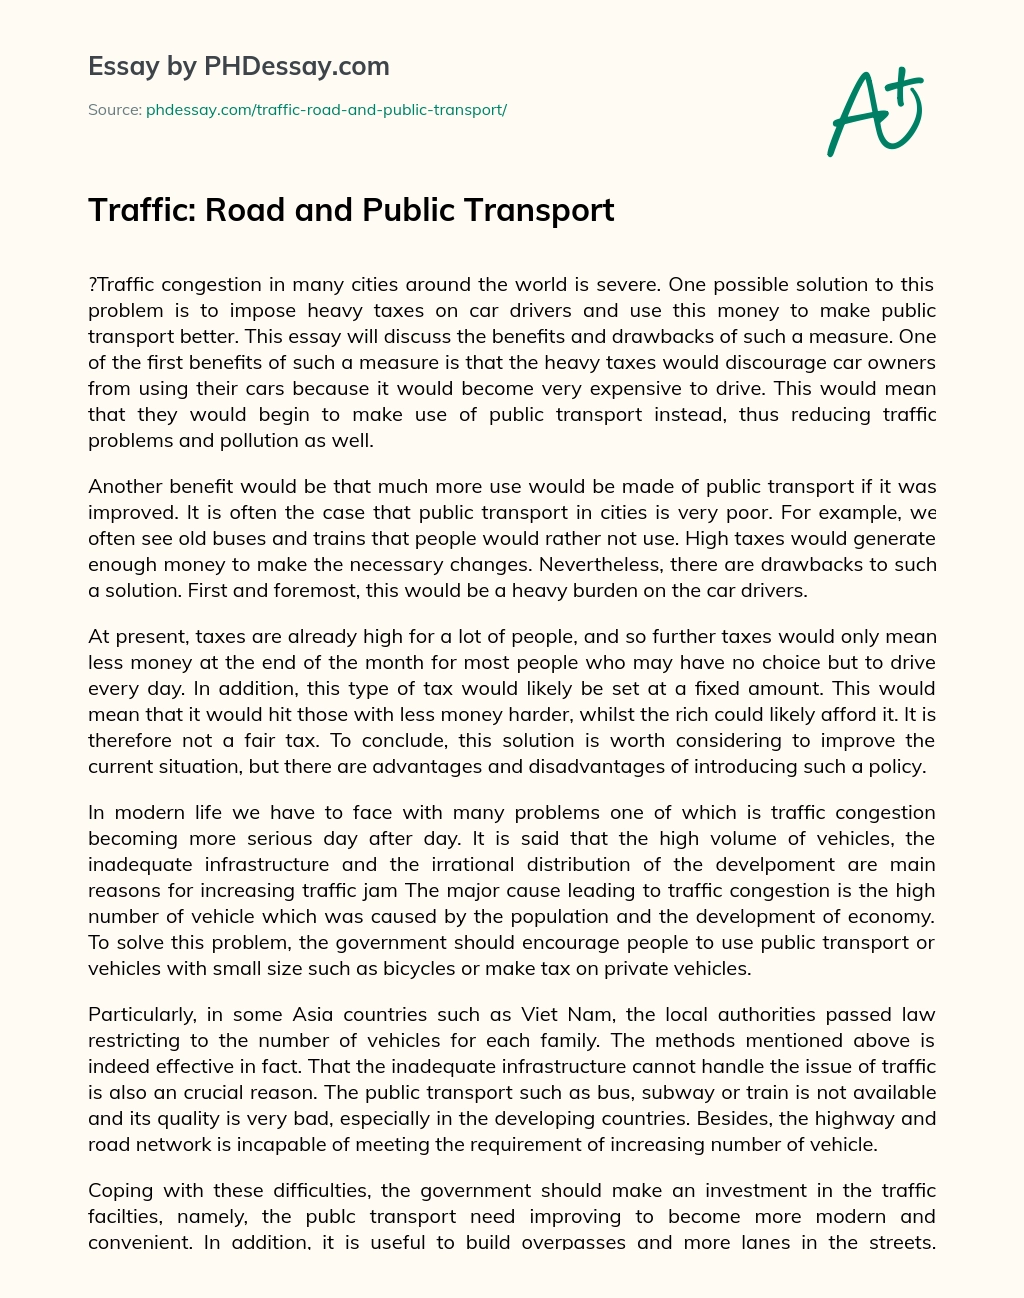 Traffic: Road and Public Transport essay